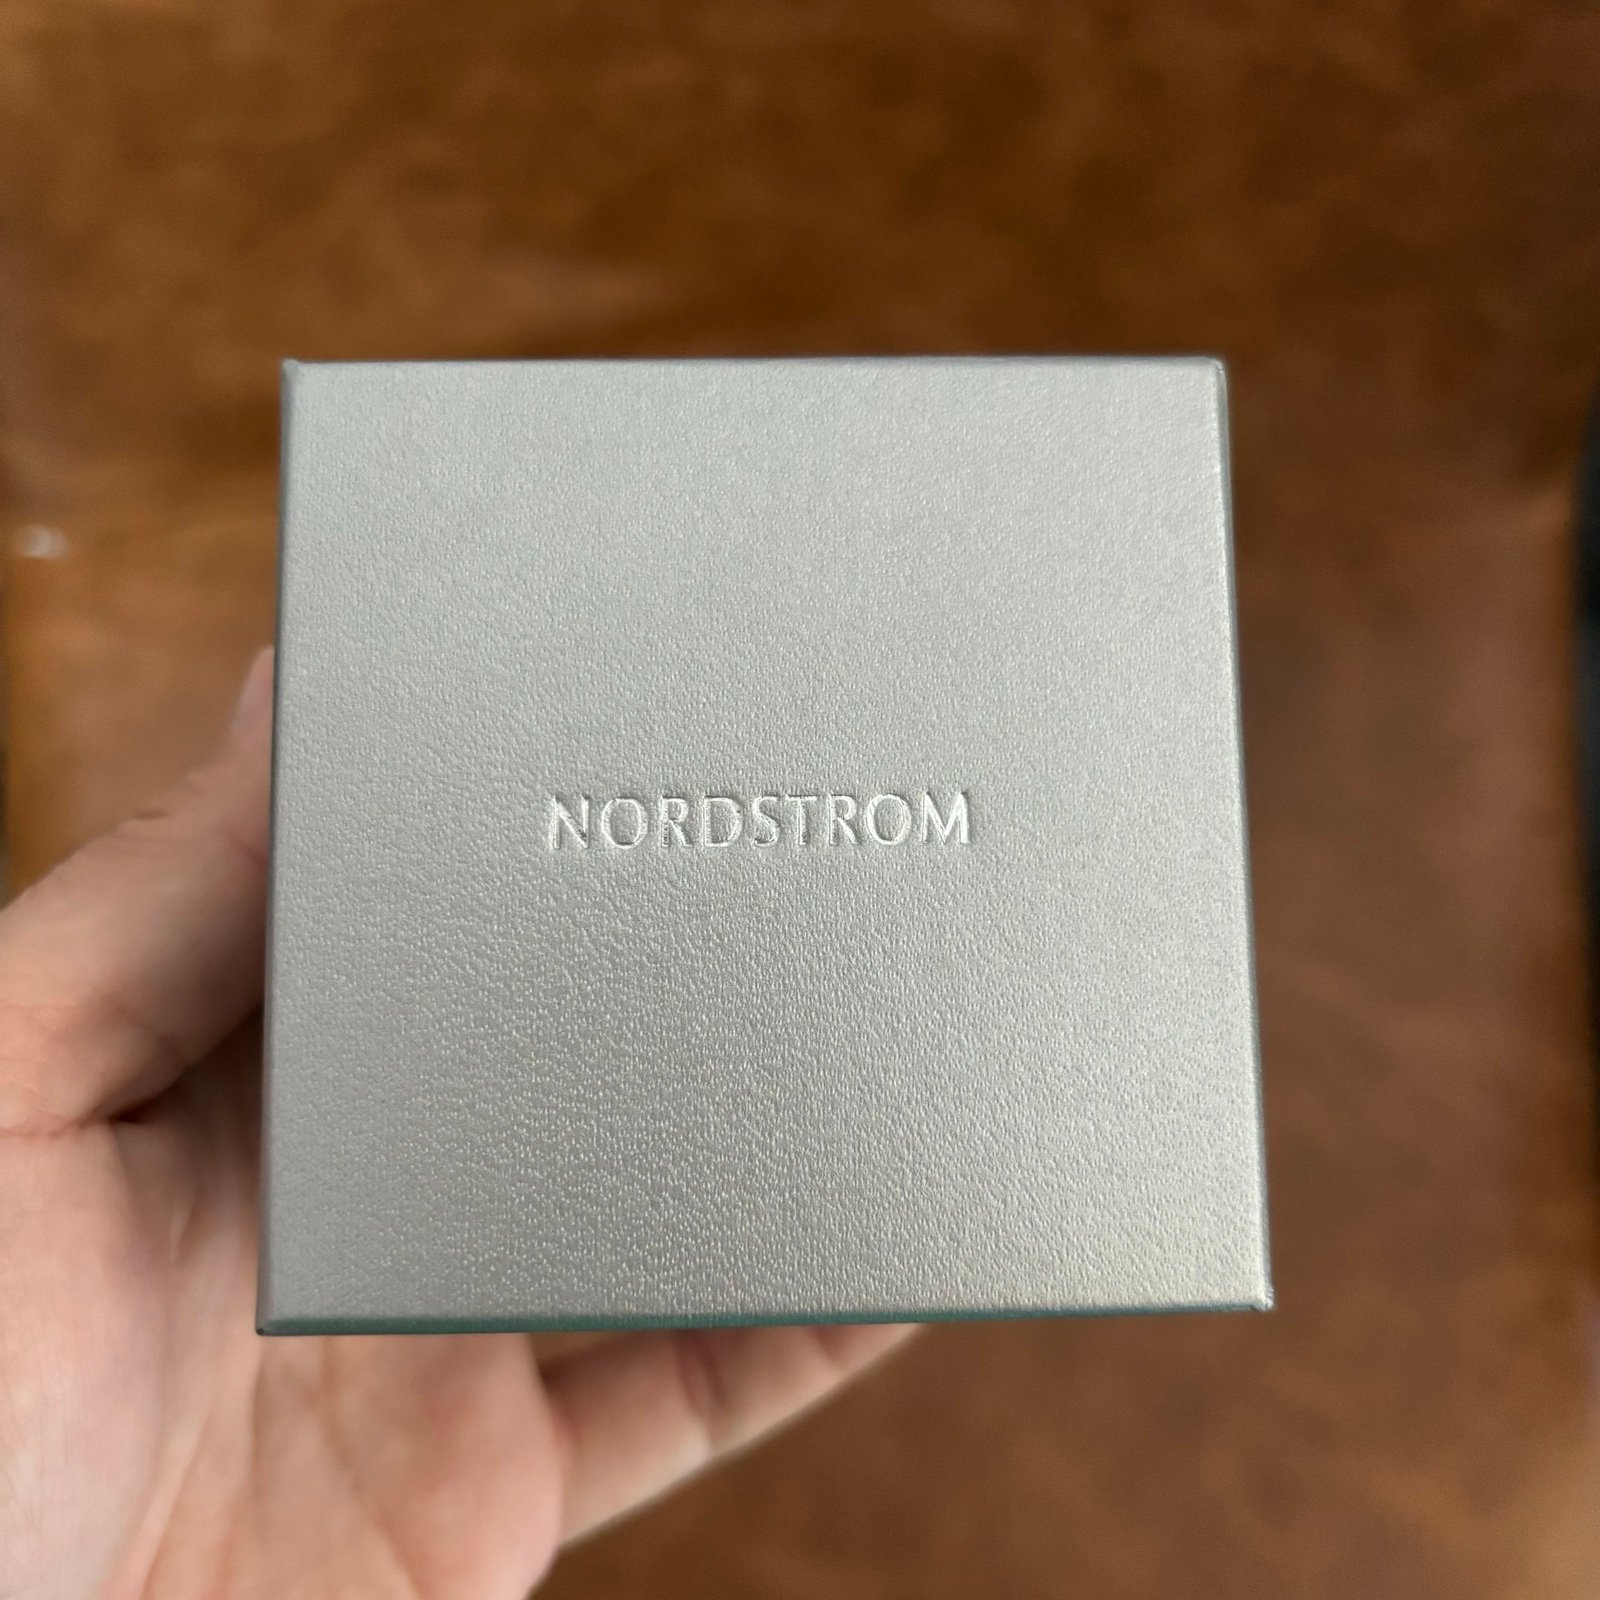 Nordstrom Ring Box fXIe7NXMc